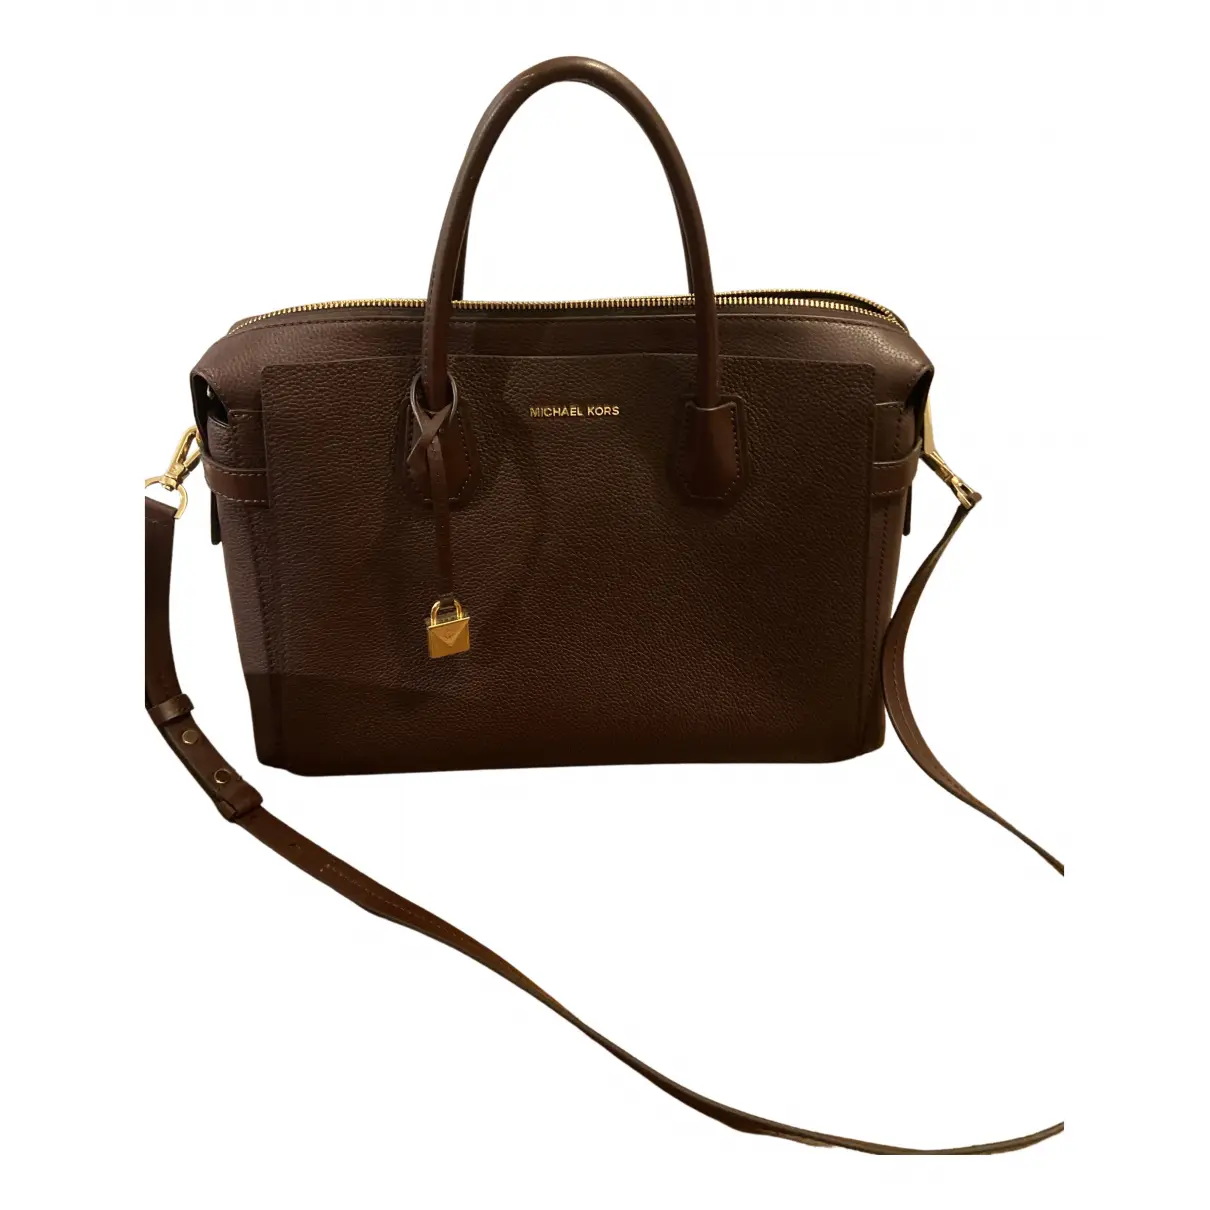 Patent leather handbag Michael Kors